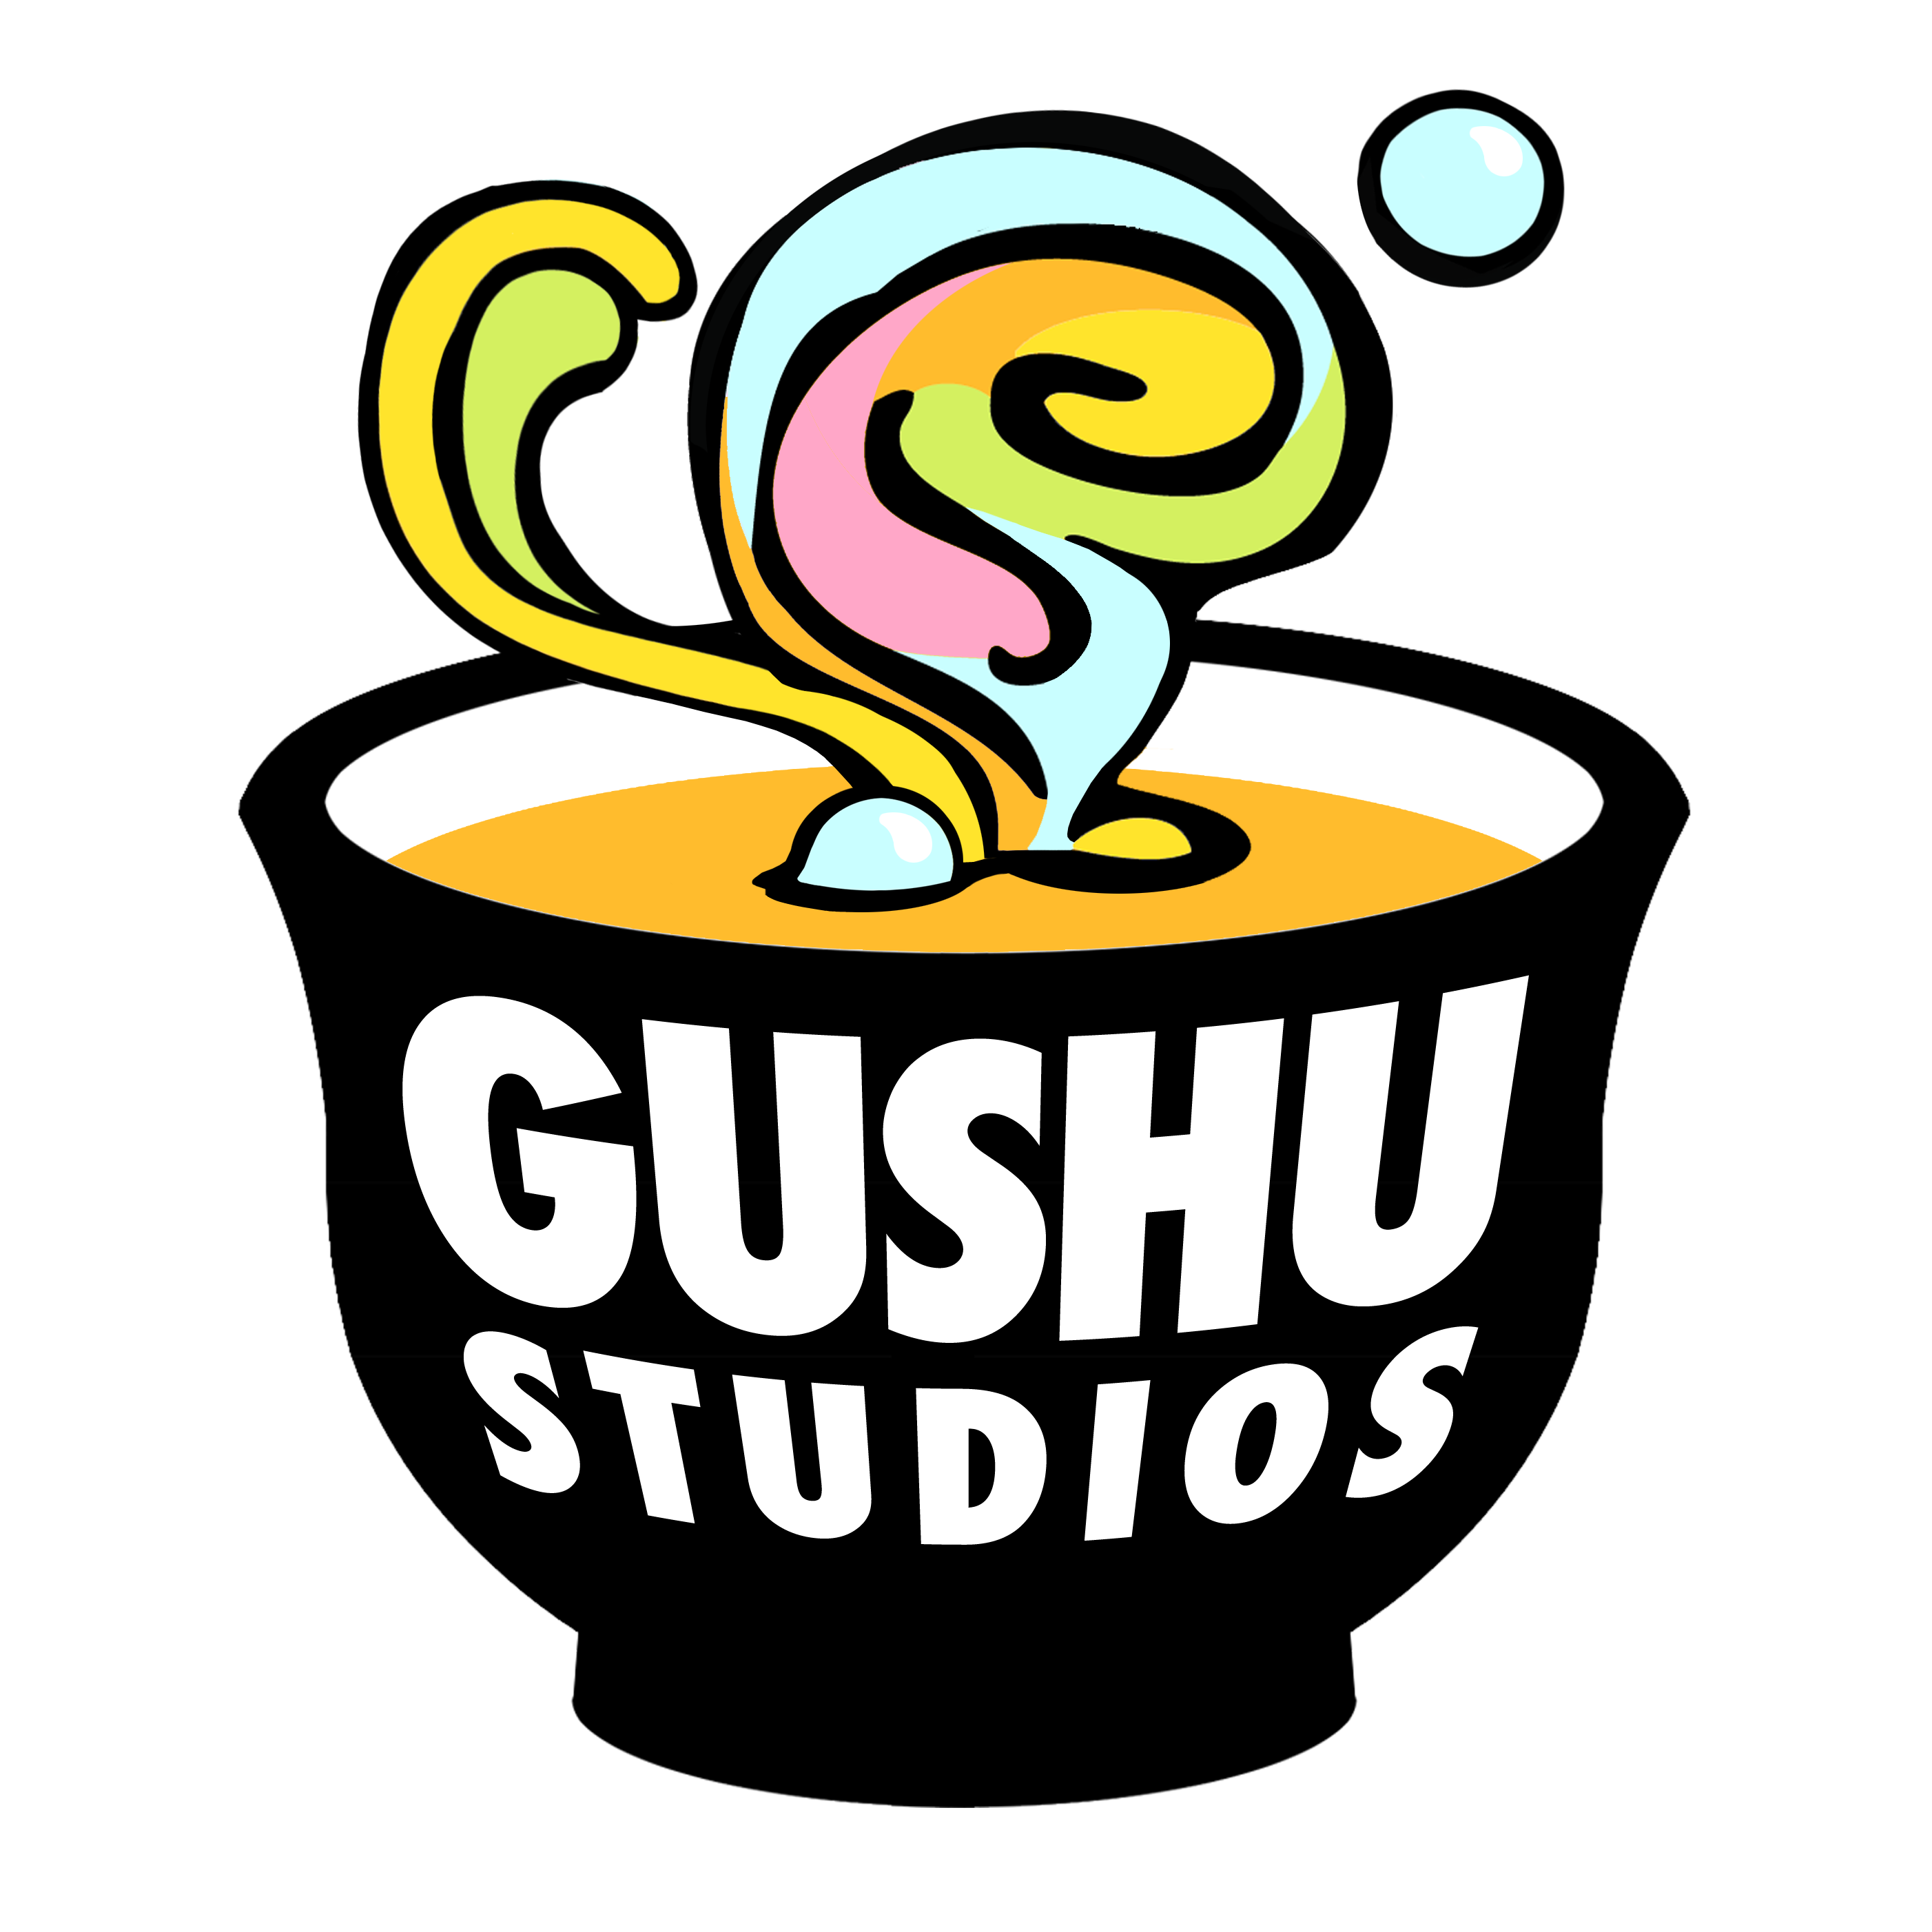 about – Gushu Studios